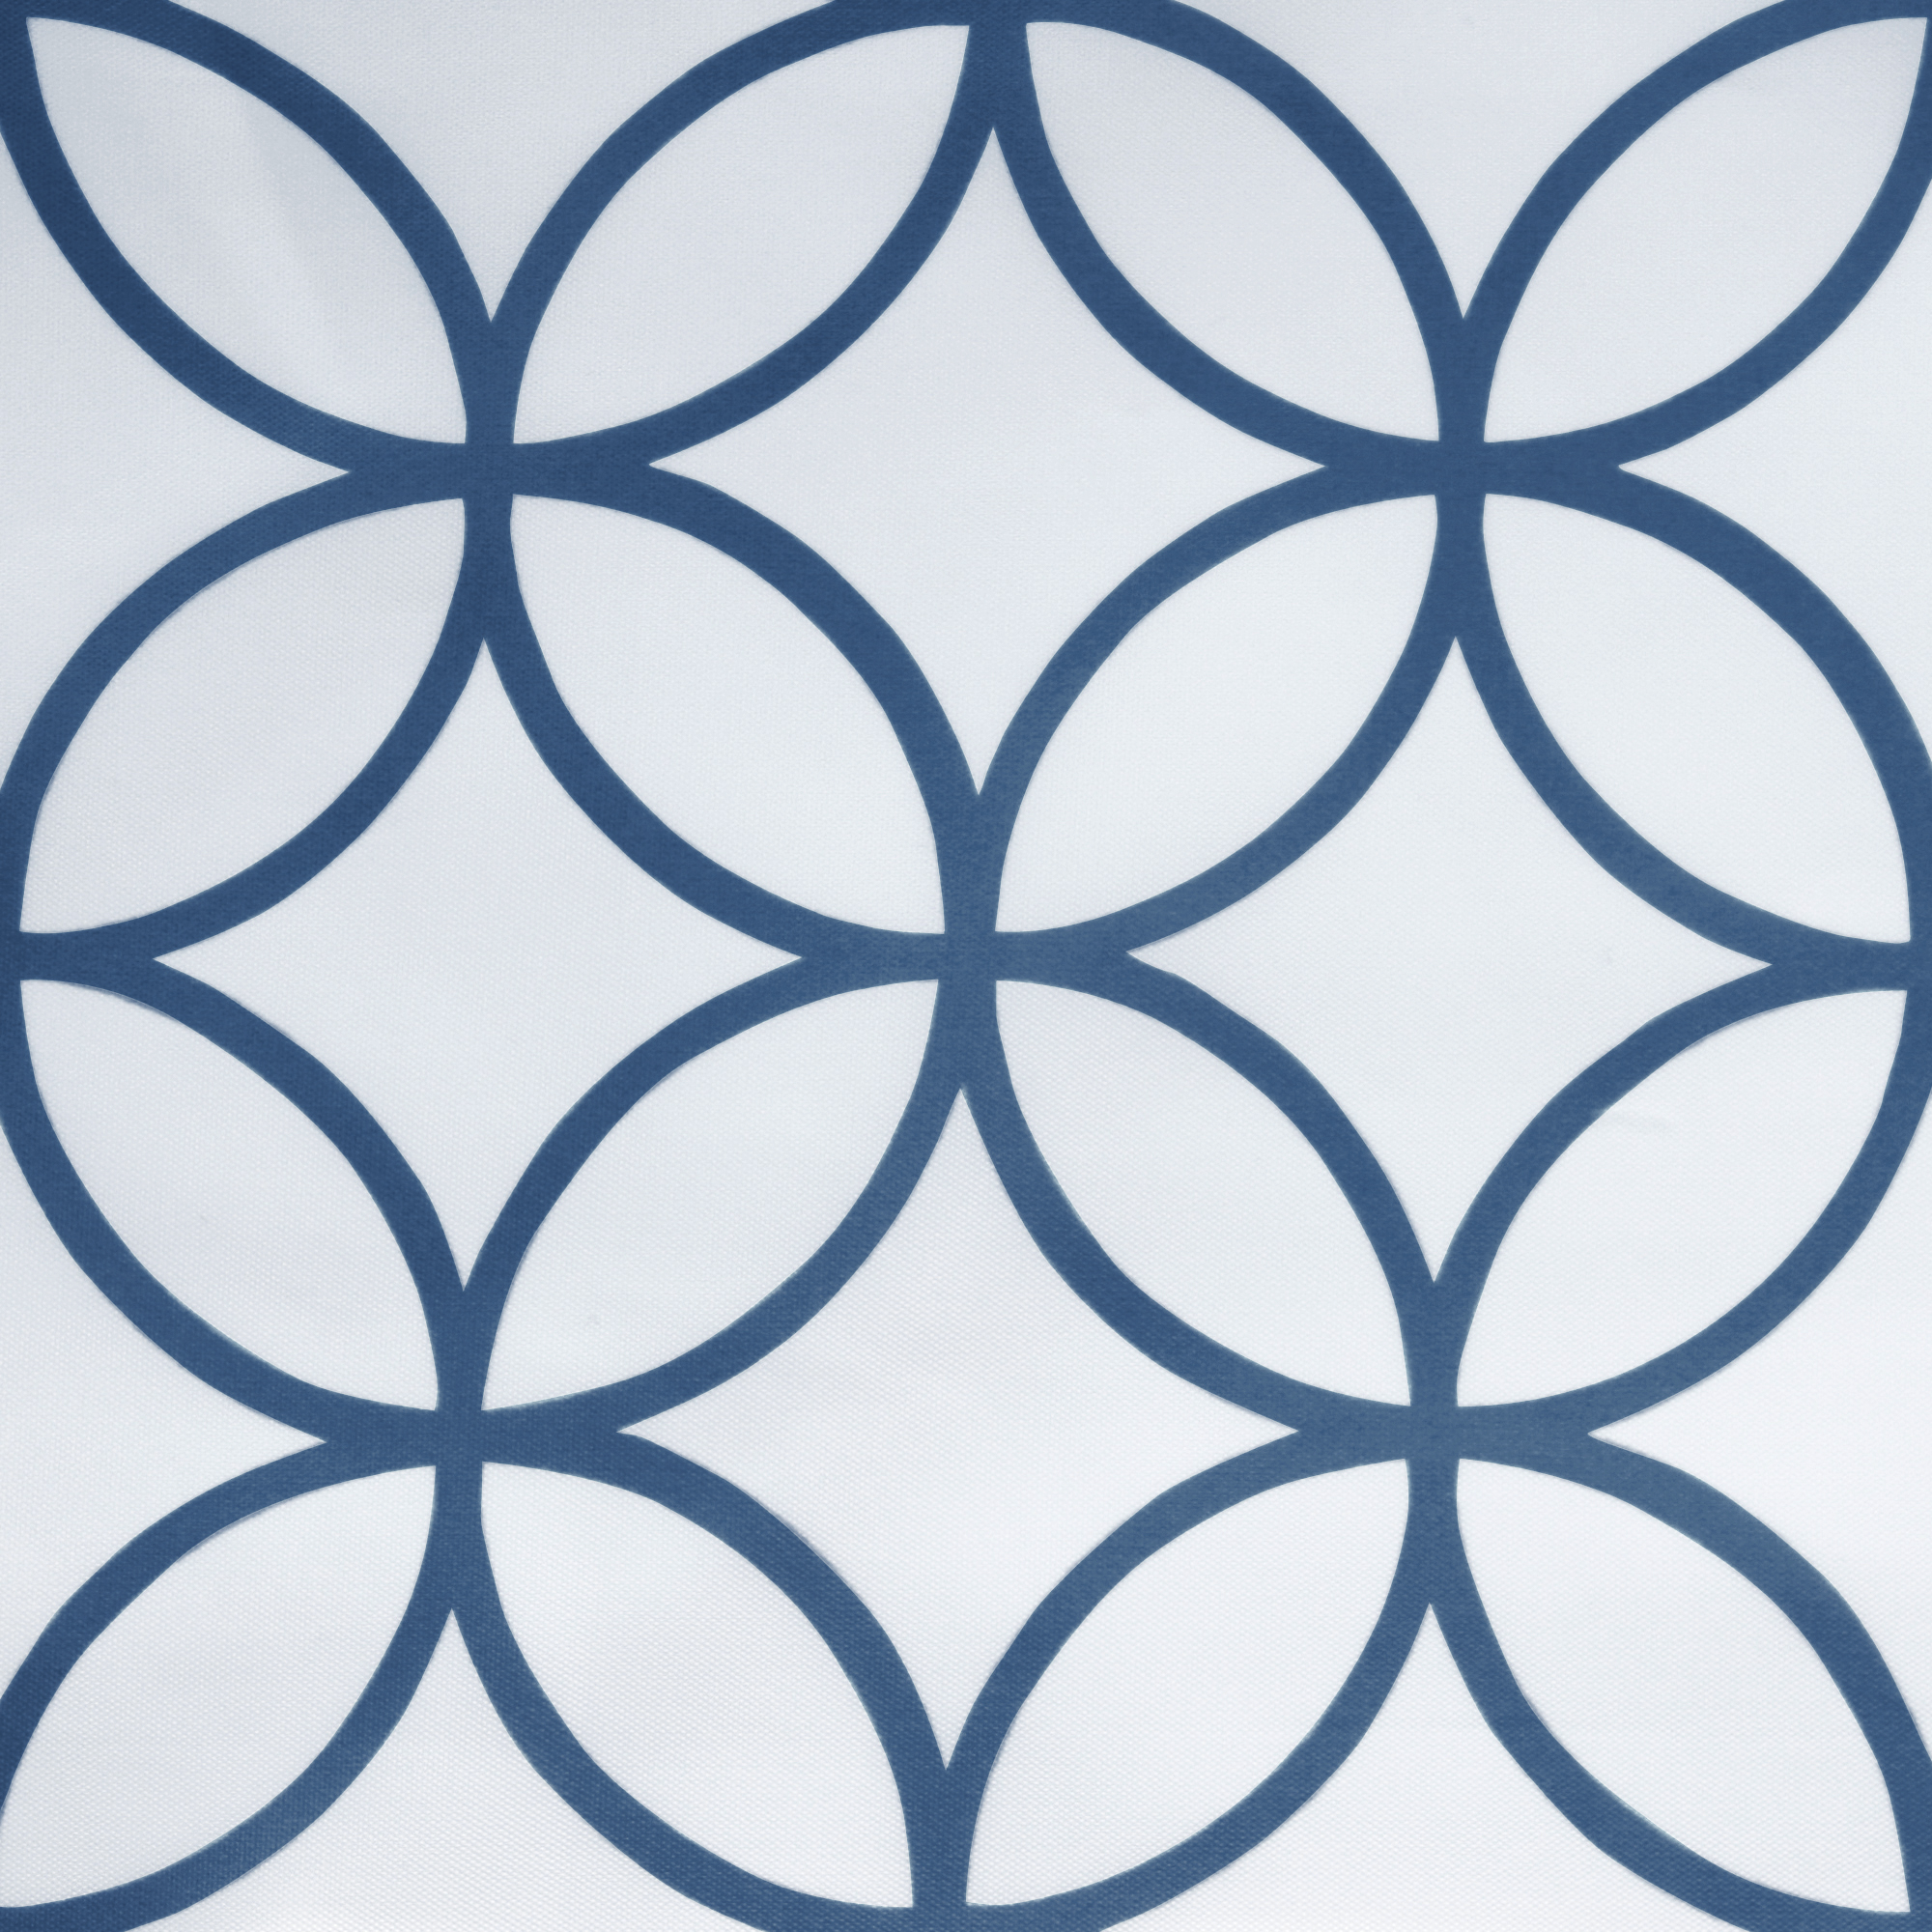 Teal and Blue PEVA Shower Curtain, 70" x 72", Mainstays Hadley Geometric, Waterproof - image 3 of 9